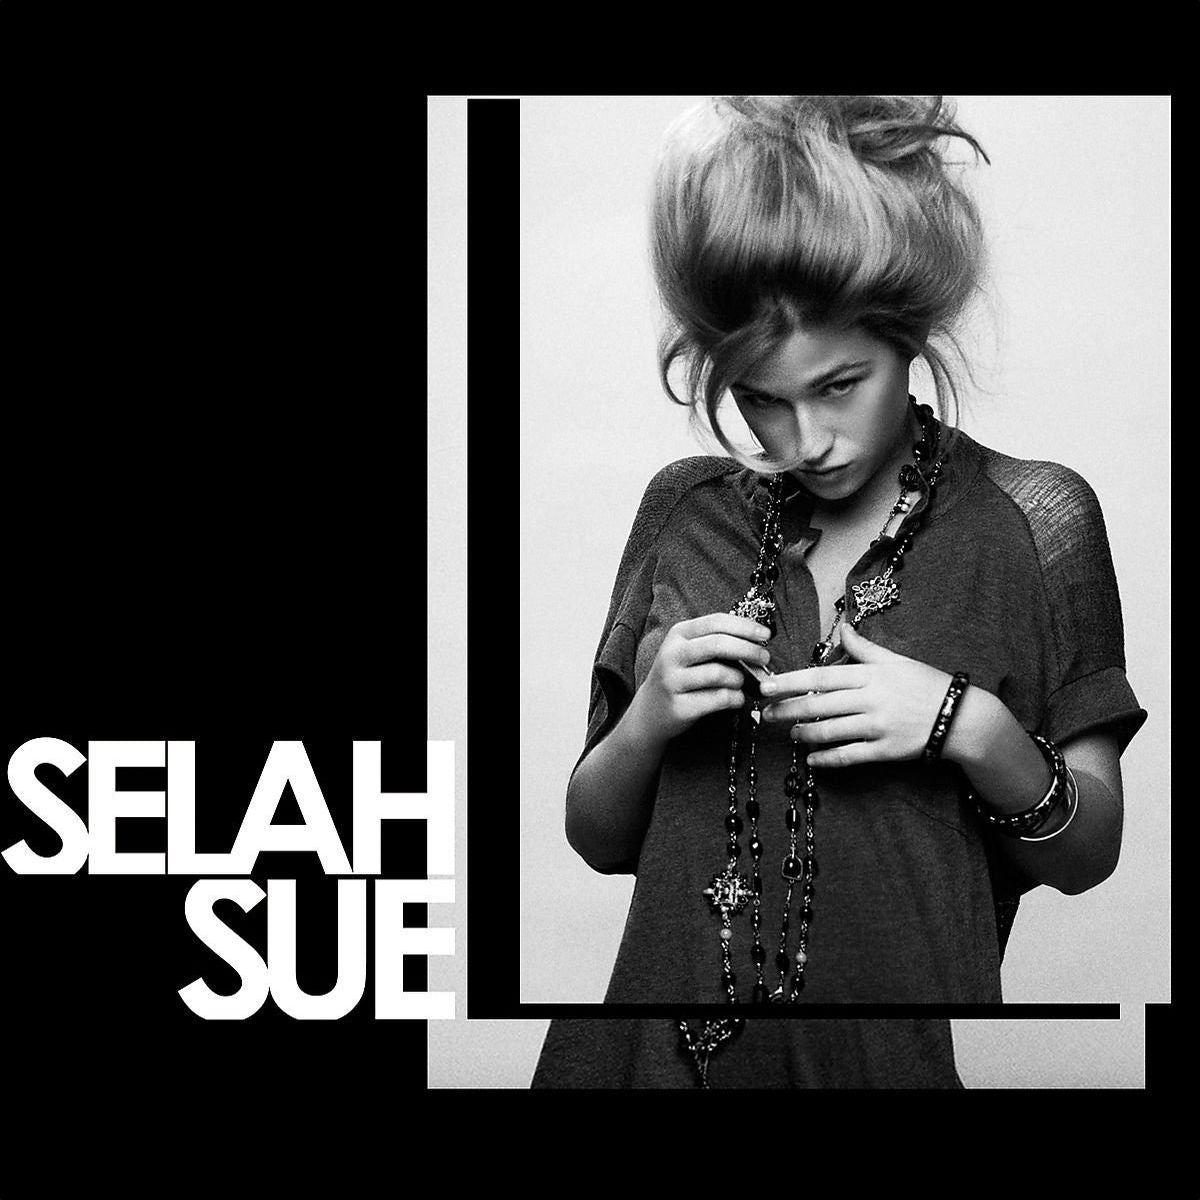 Selah Sue - Selah Sue - Vinyle